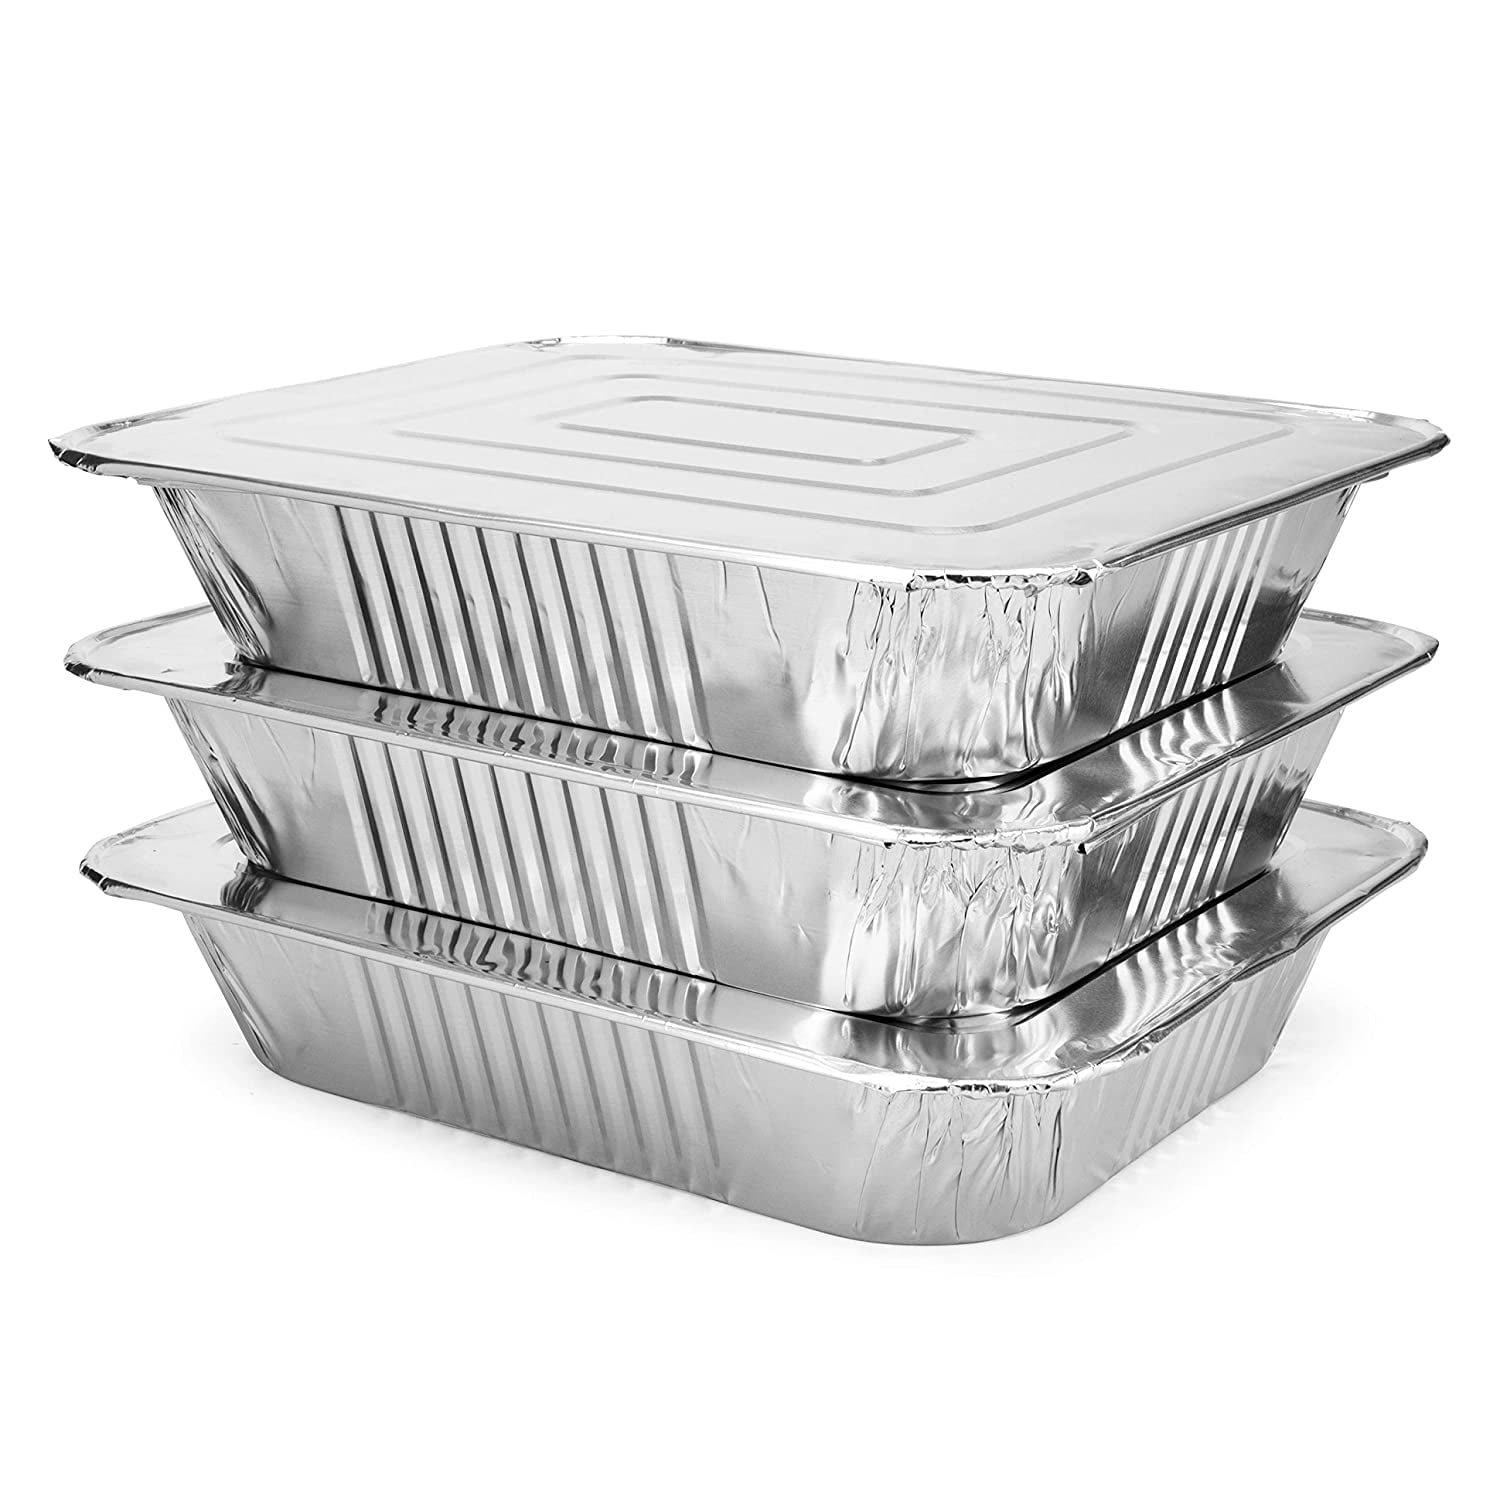 Foil Pan Holder – Aluminum Baking Dish Carrier – Potluck Party